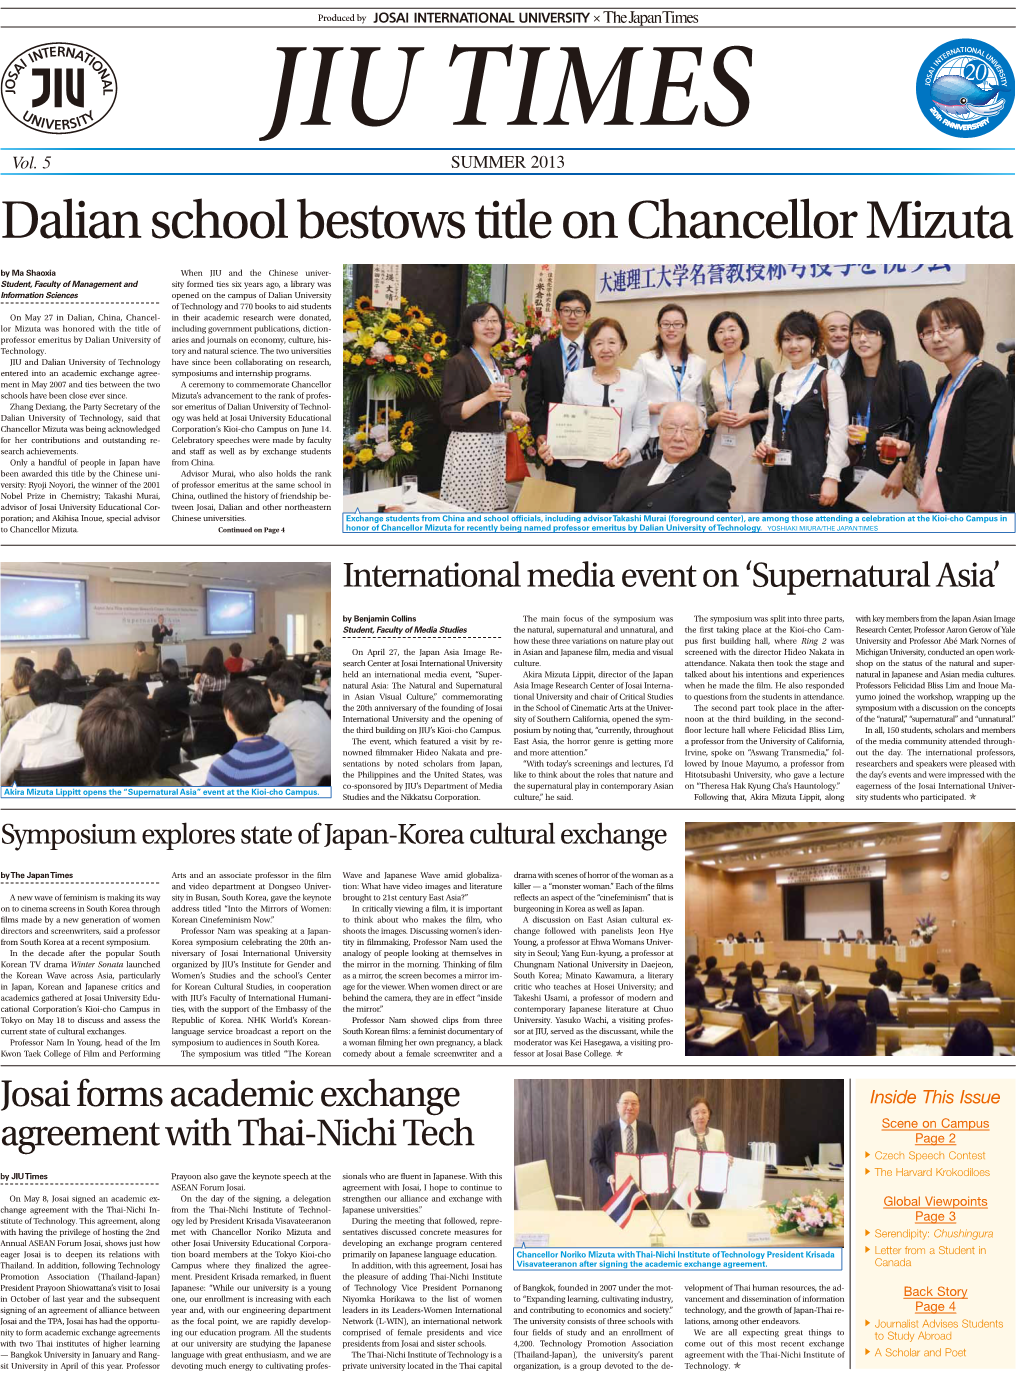 Dalian School Bestows Title on Chancellor Mizuta